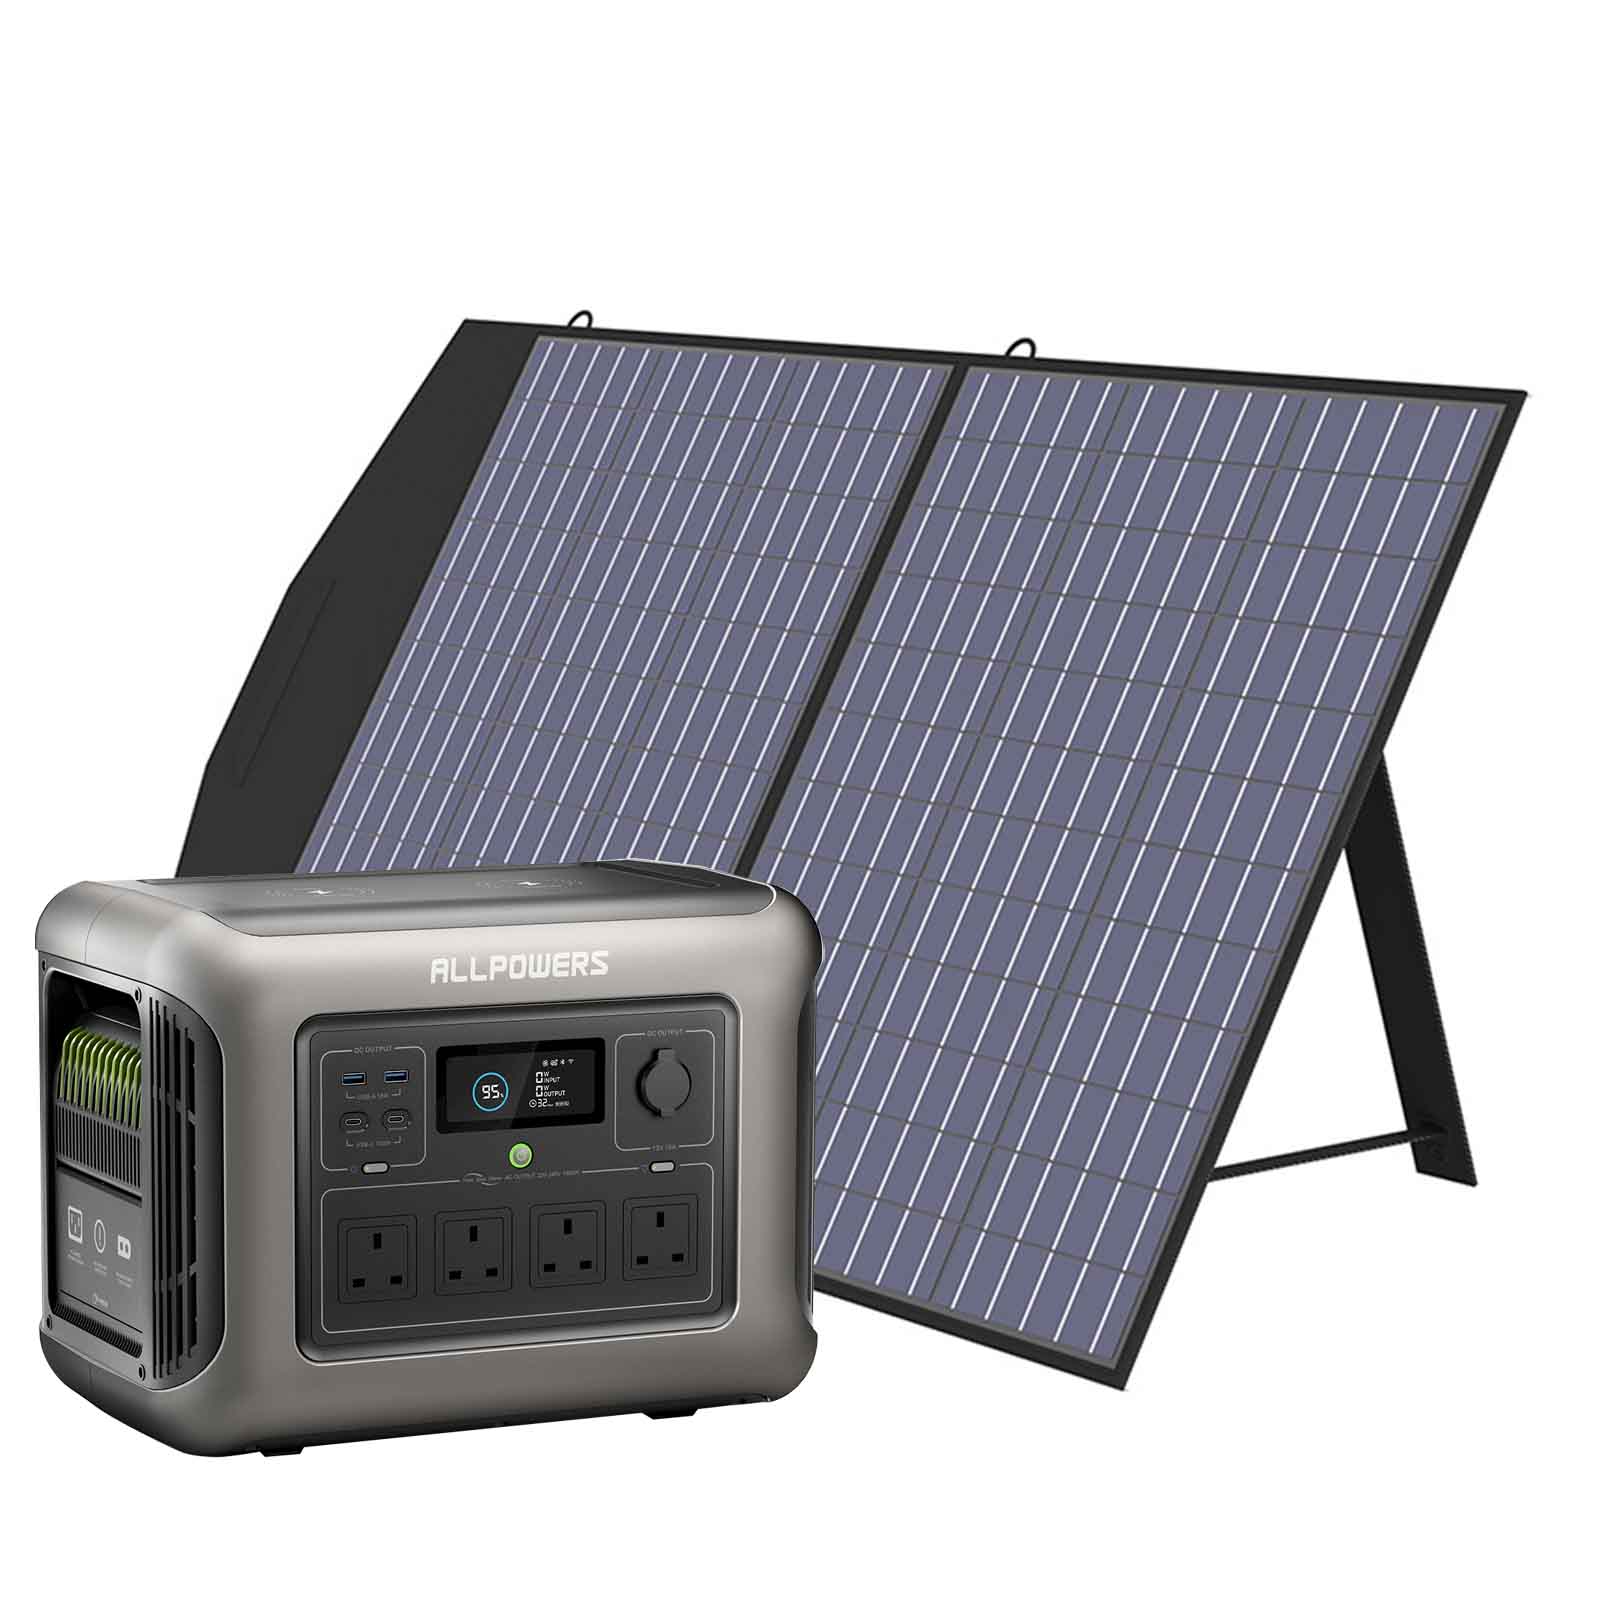 ALLPOWERS Solar Generator Kit 1800W (R1500 + SP027 100W Solar Panel)